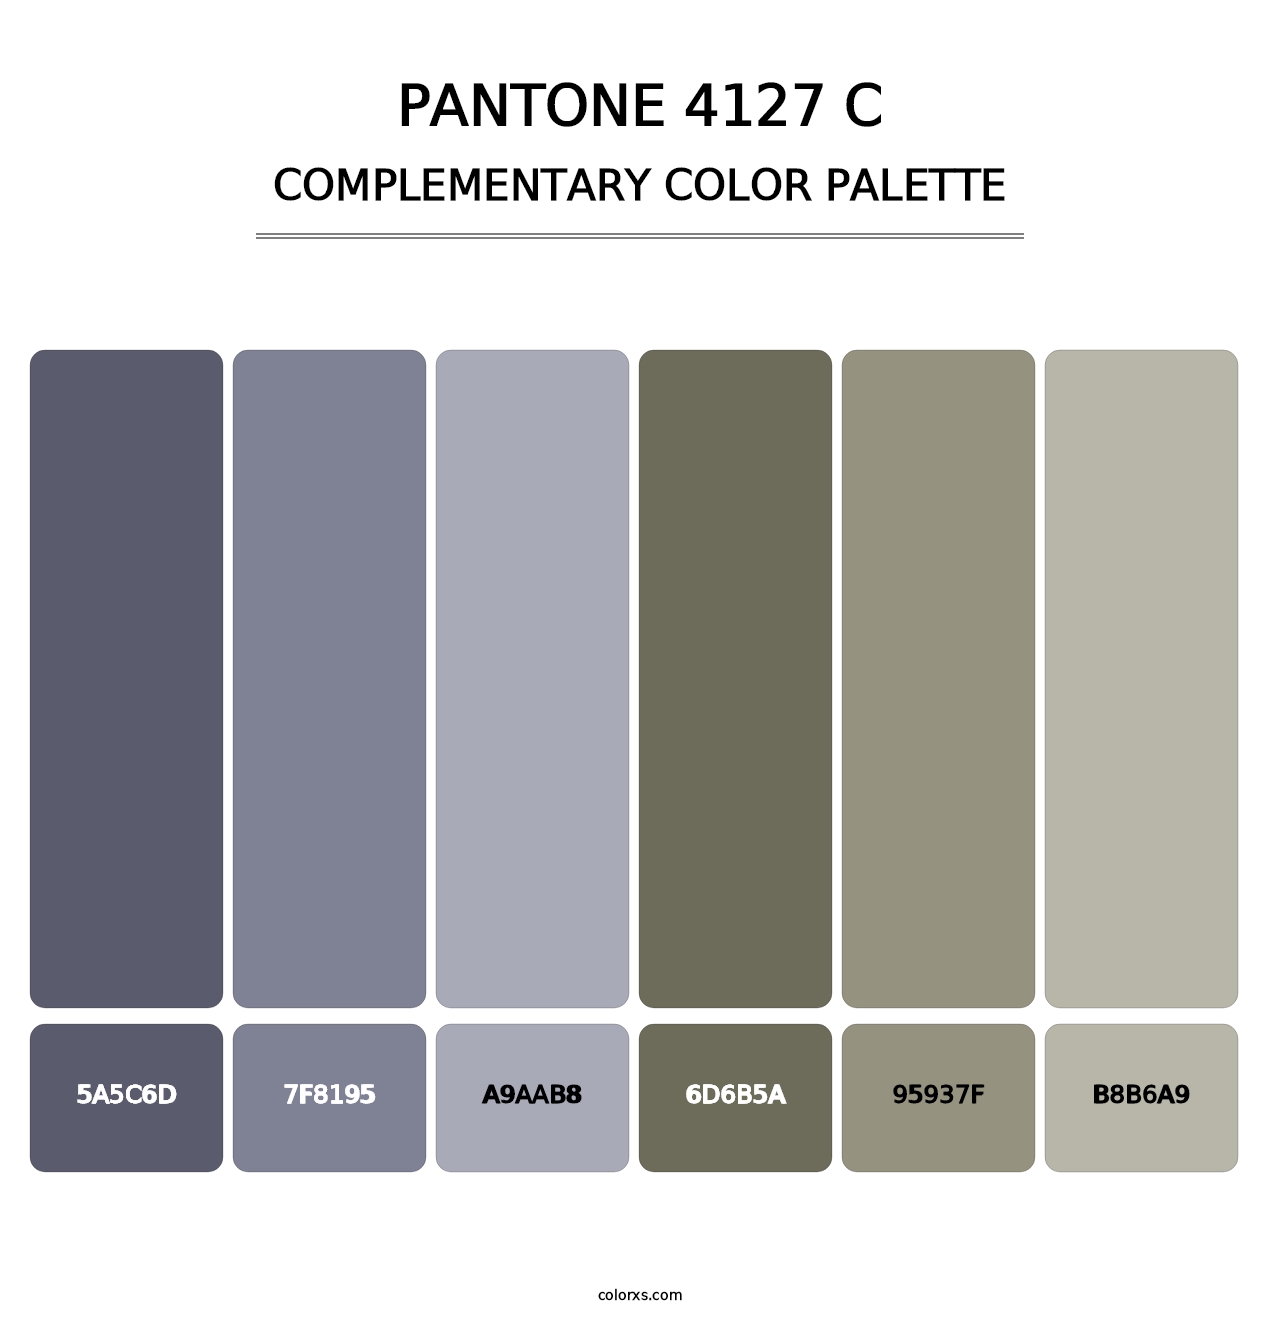 PANTONE 4127 C - Complementary Color Palette